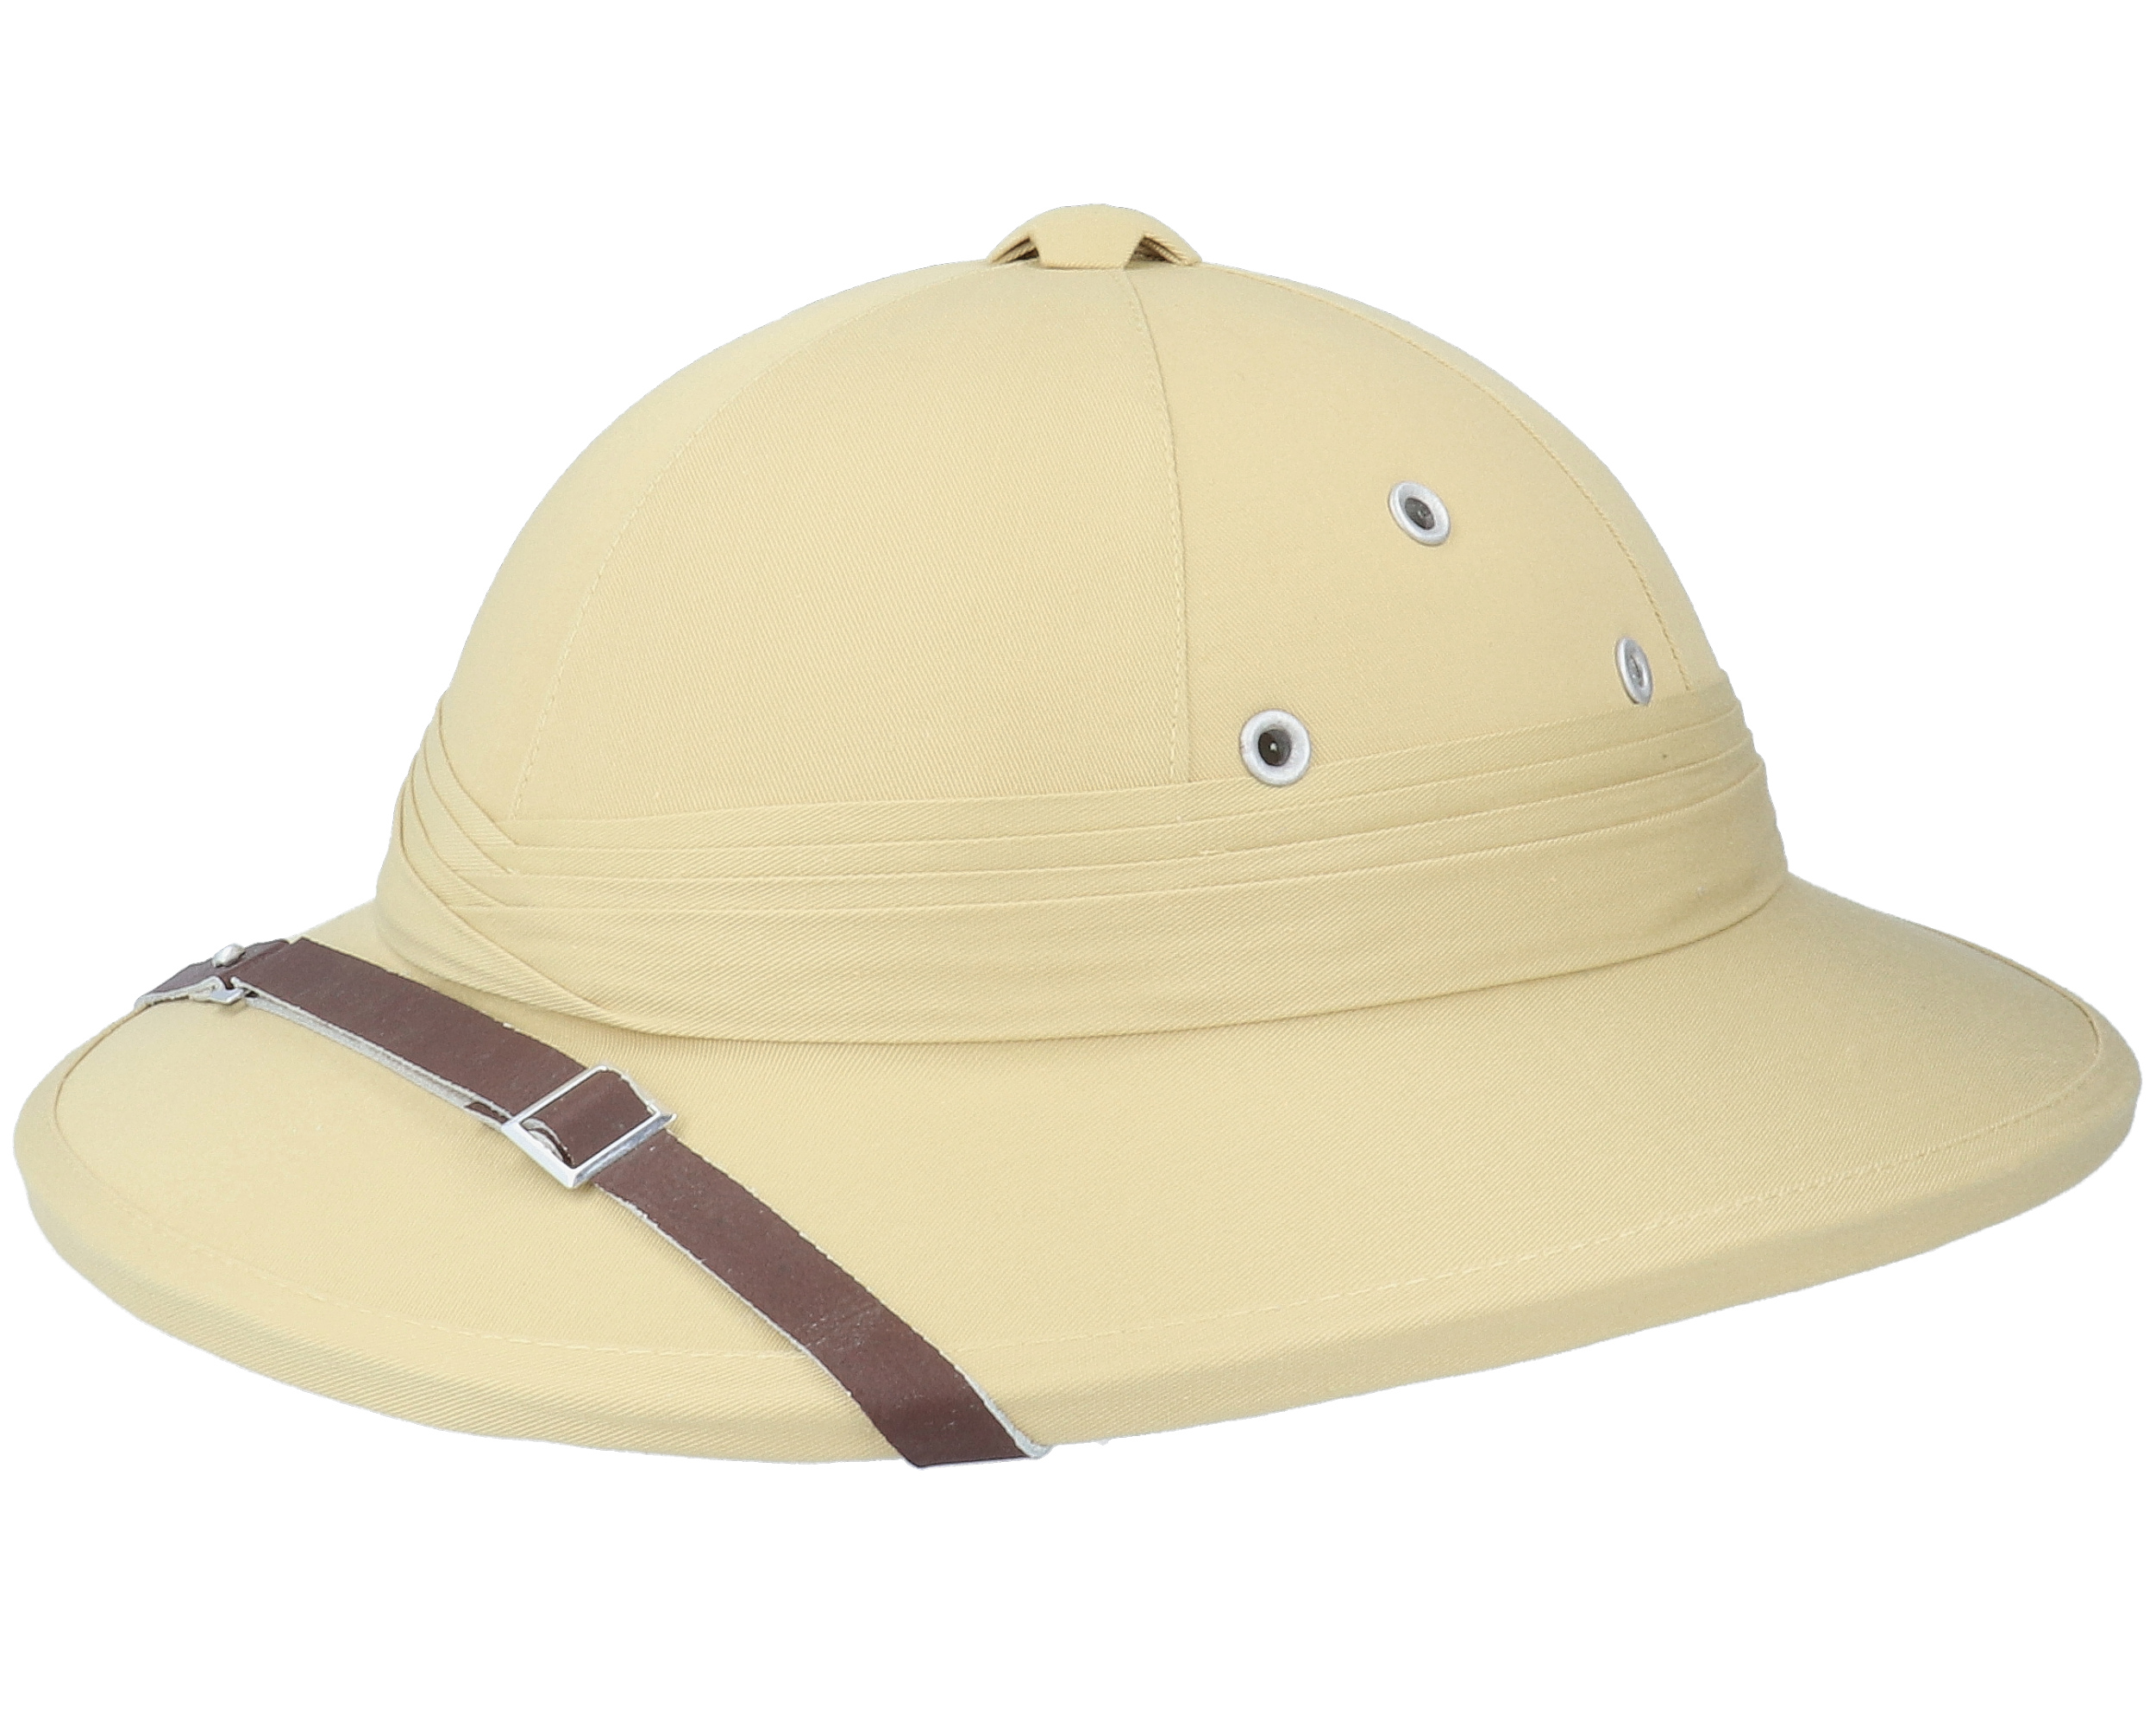 French Pith Helmet Safari Hat - Jaxon & James - BonéHatstore.pt